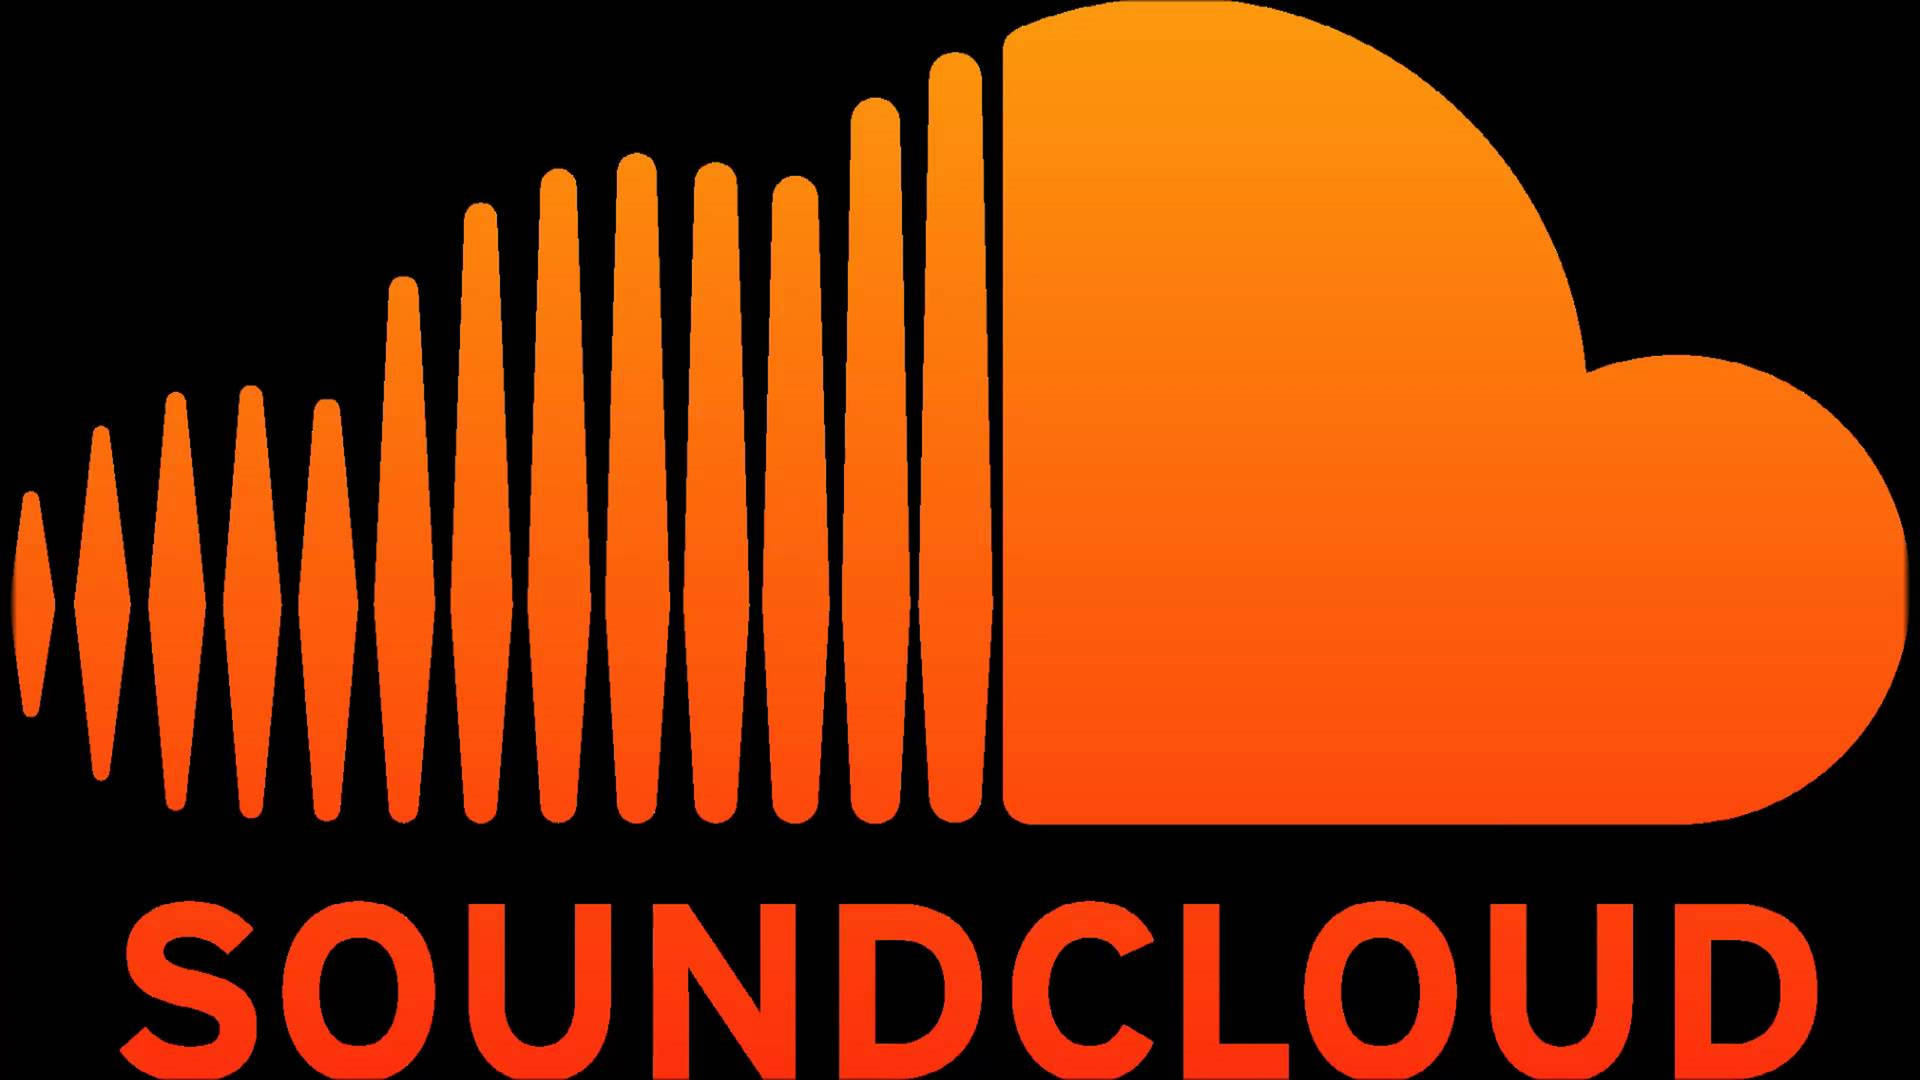 Soundcloud Music Distribution Platform Background